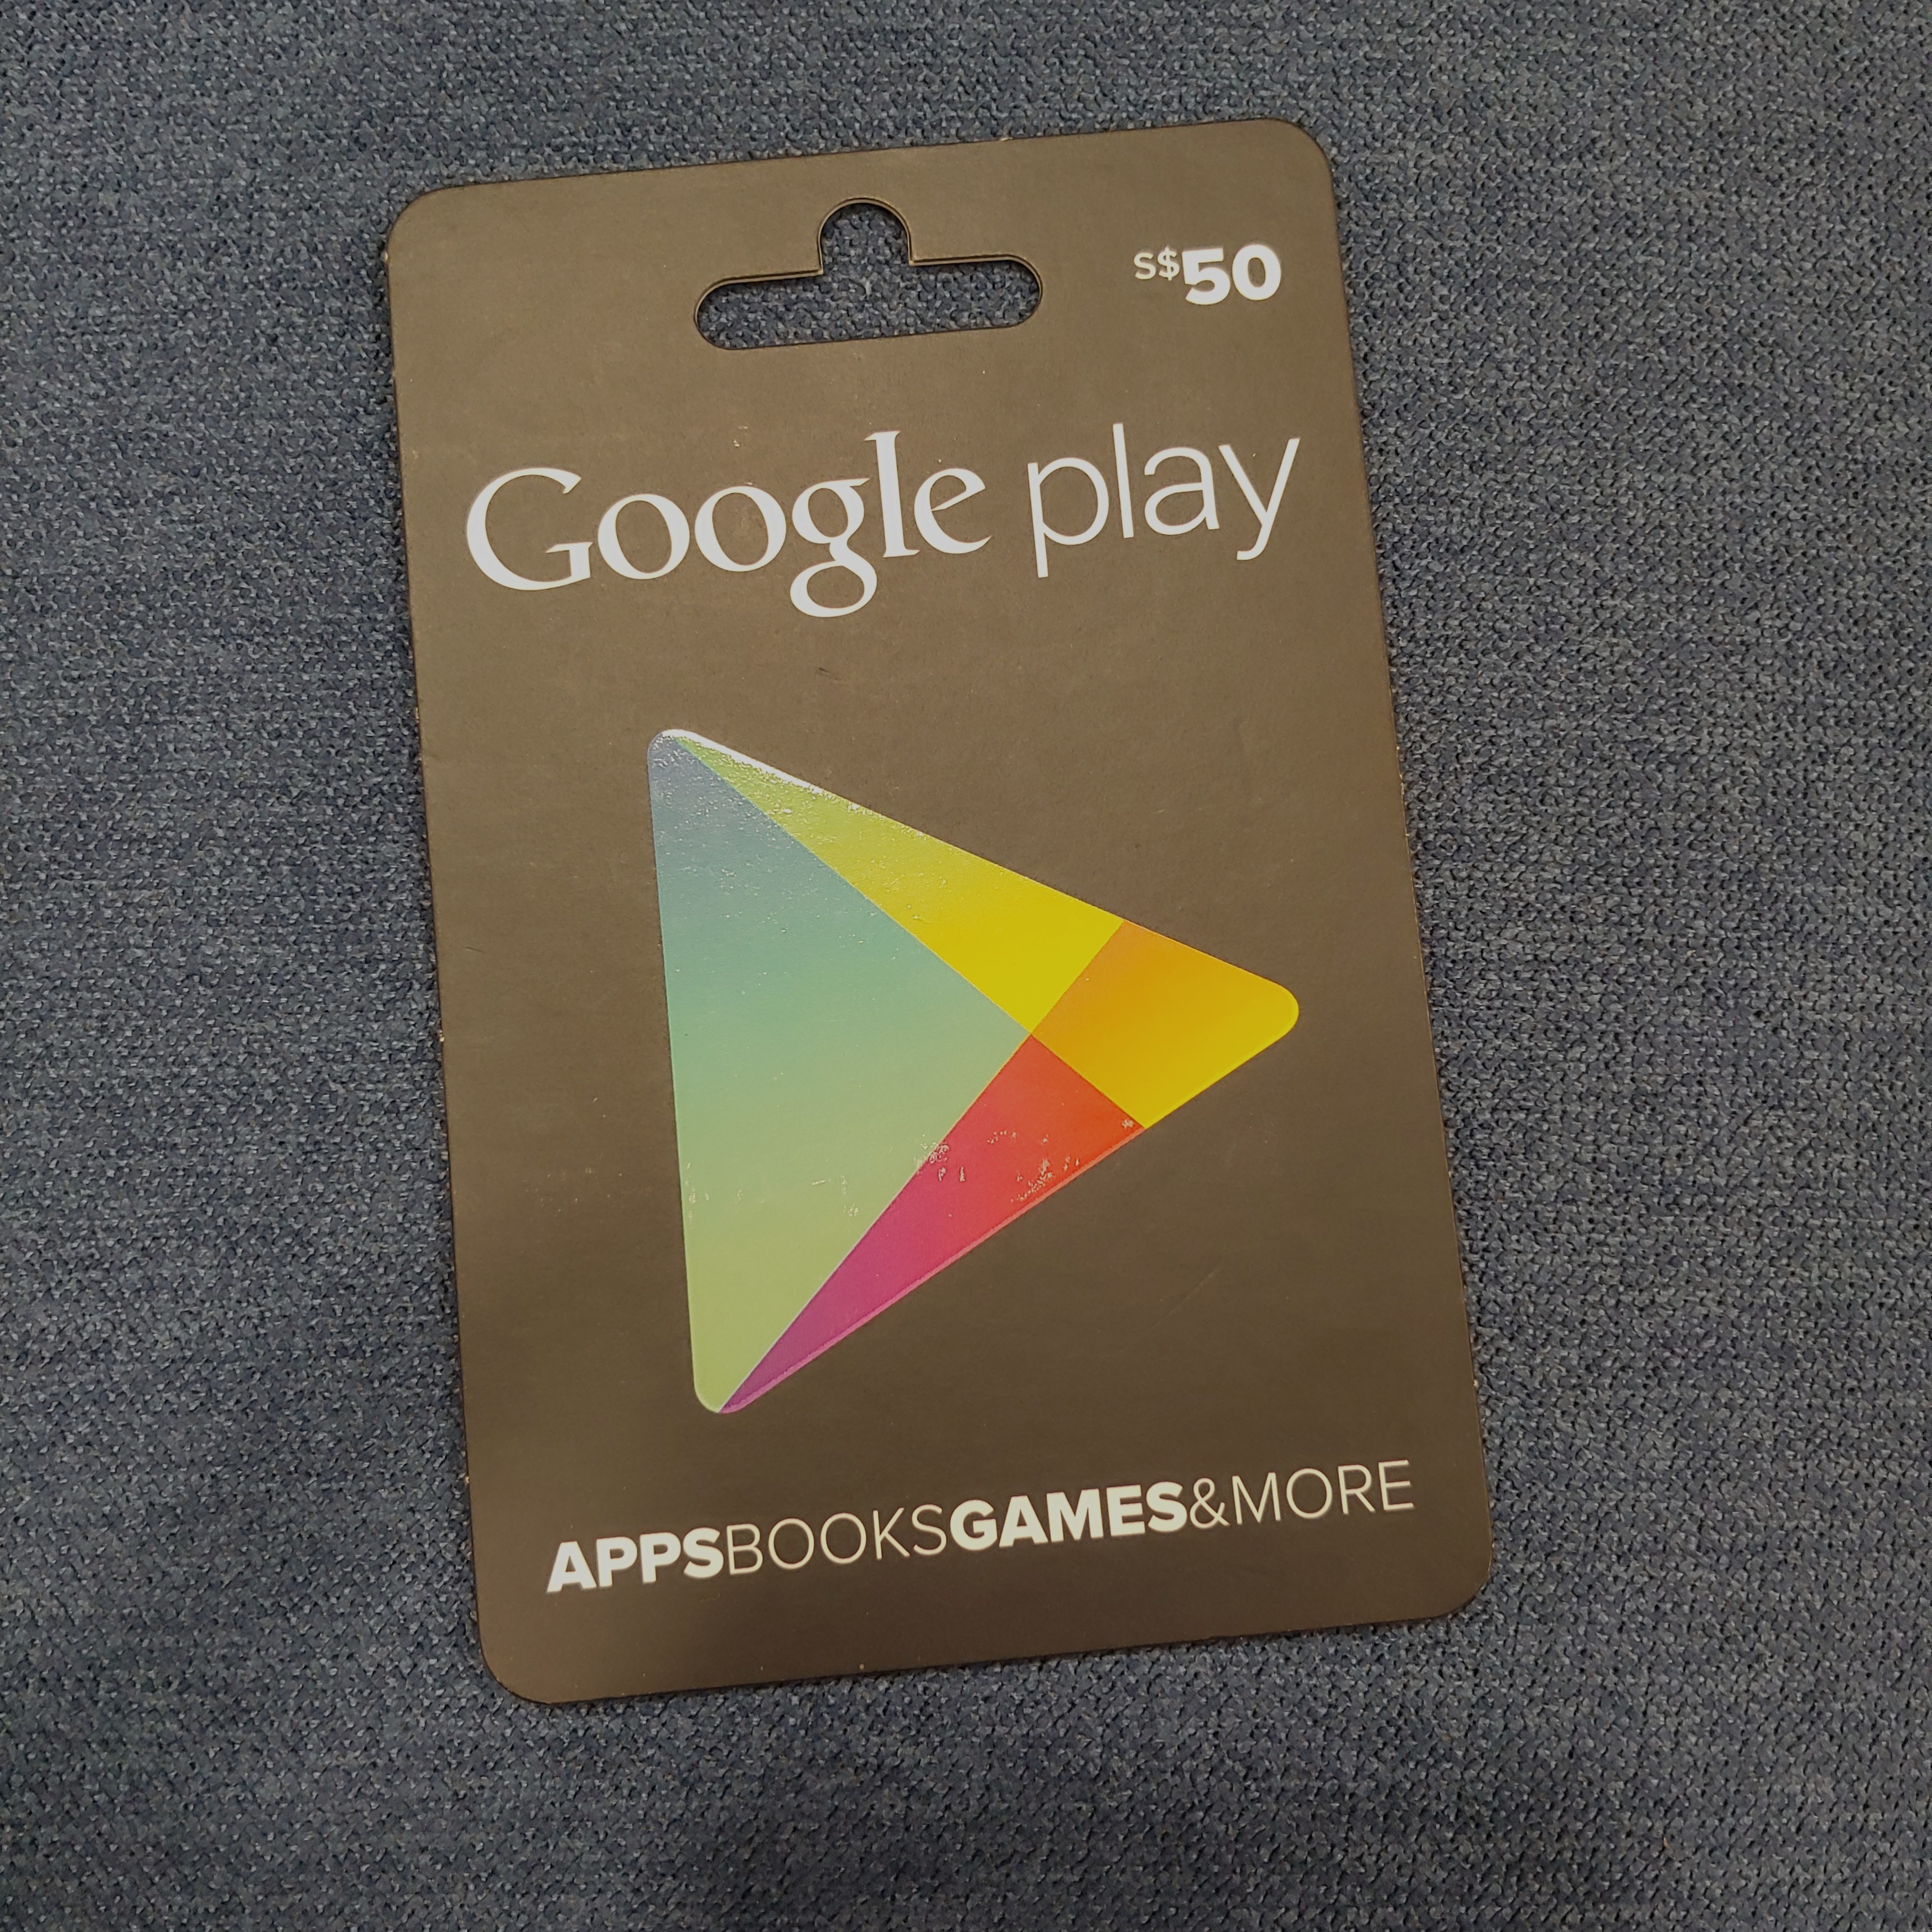 Google play 50. Карта Google Play. Карточки гугл плей. Подарочная карта Google Play. Карточка плей Маркет.